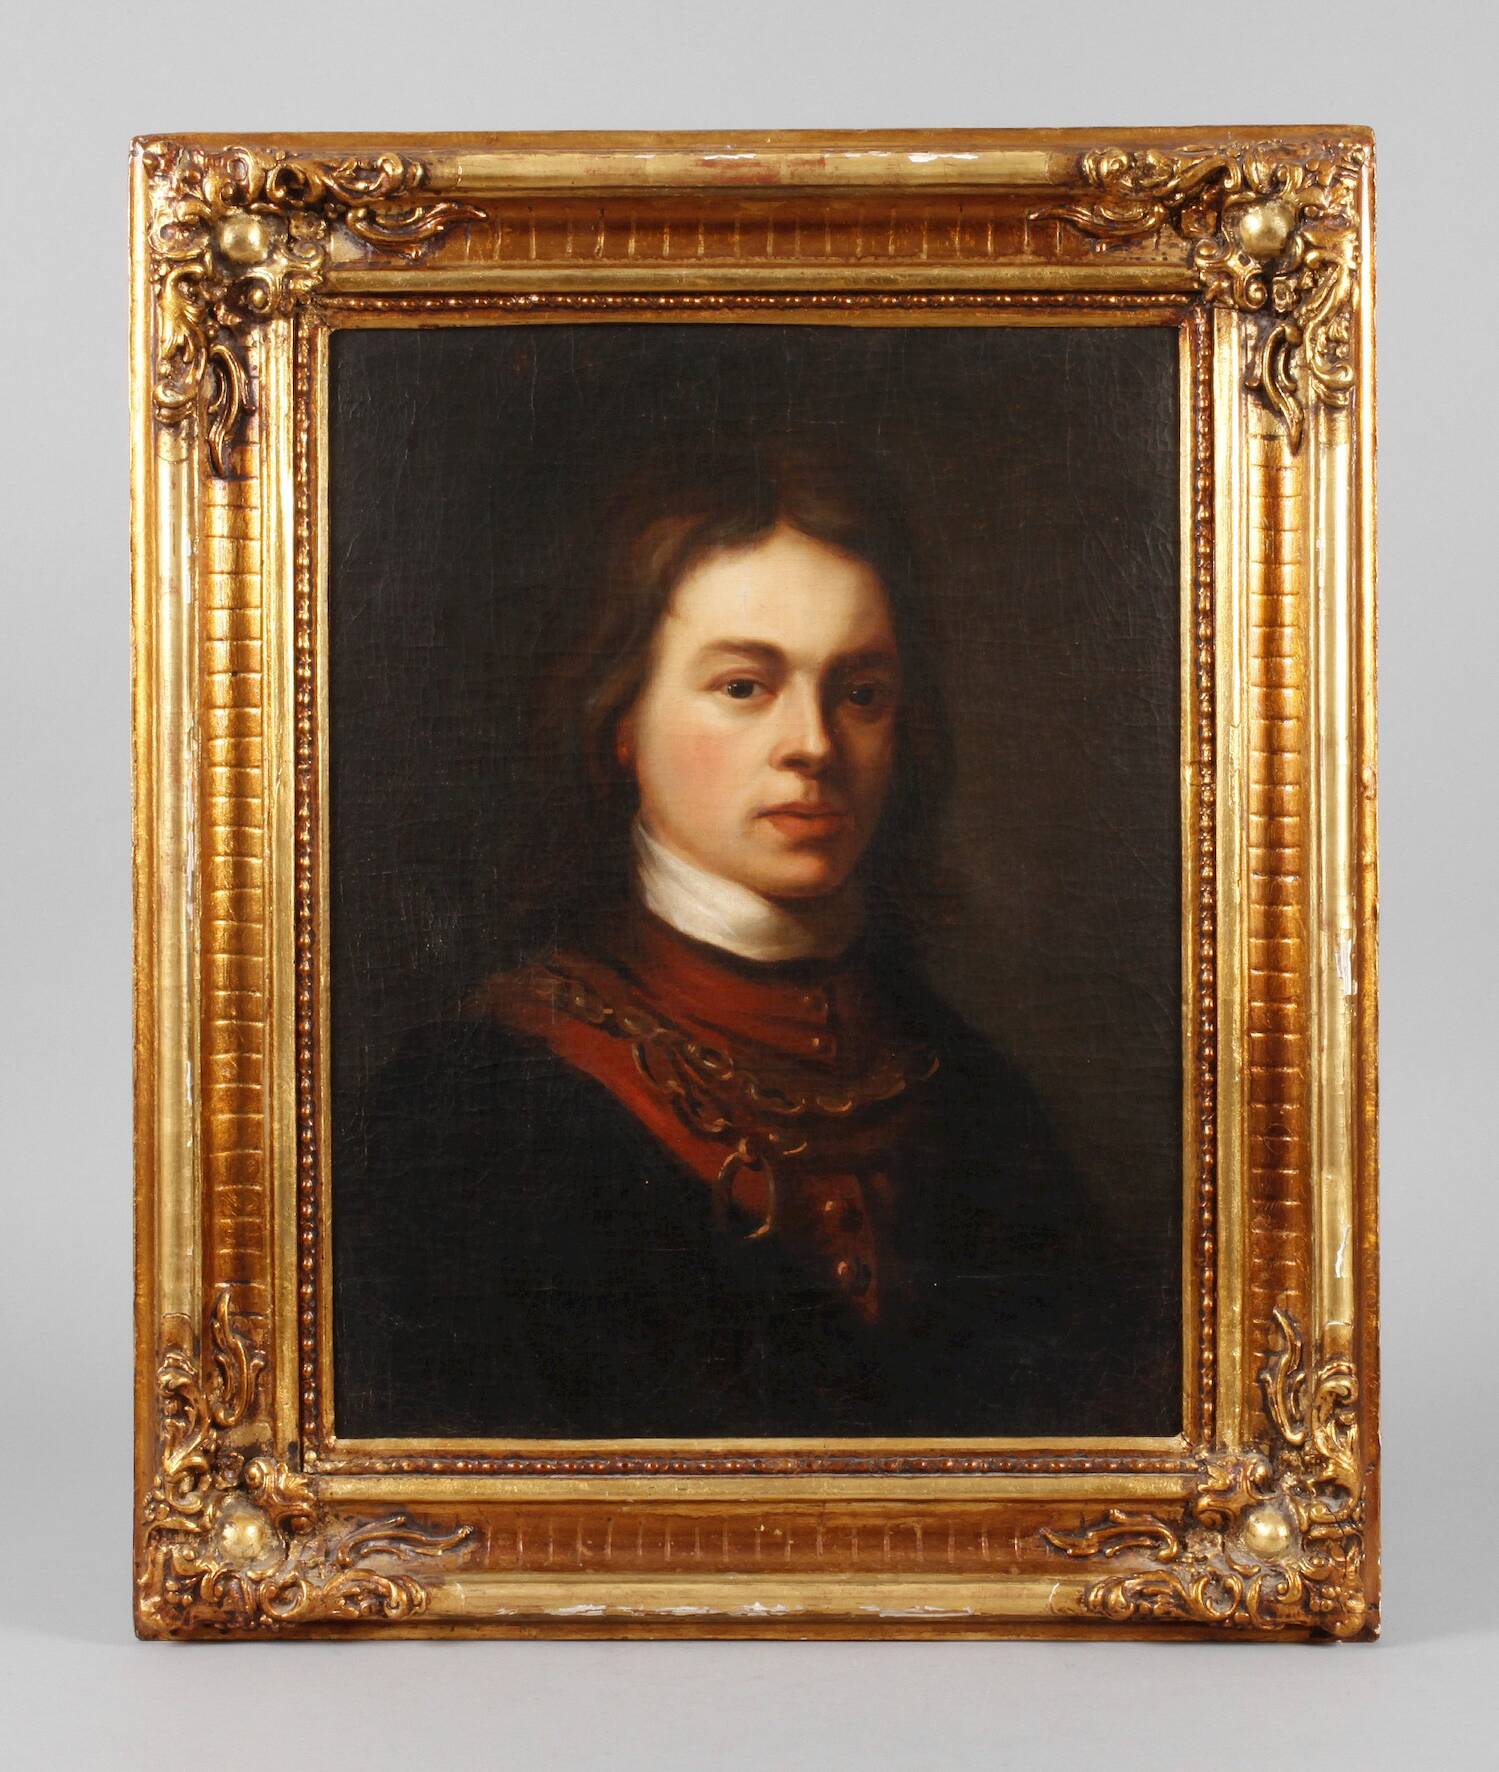 Barockportrait nach Samuel van Hoogstraten